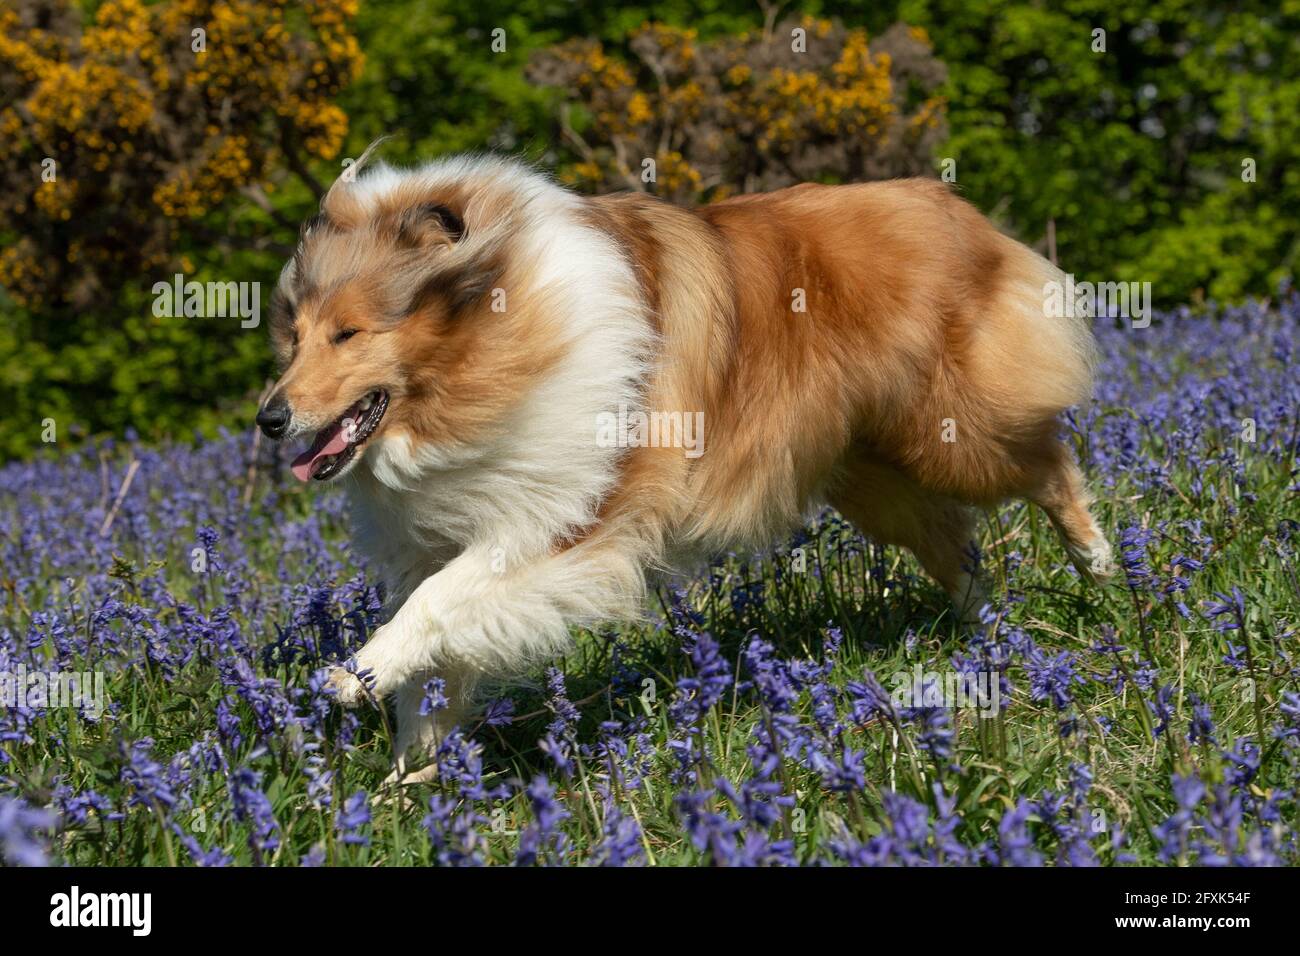 rough collie dog running through bluebell flowers Stock Photo